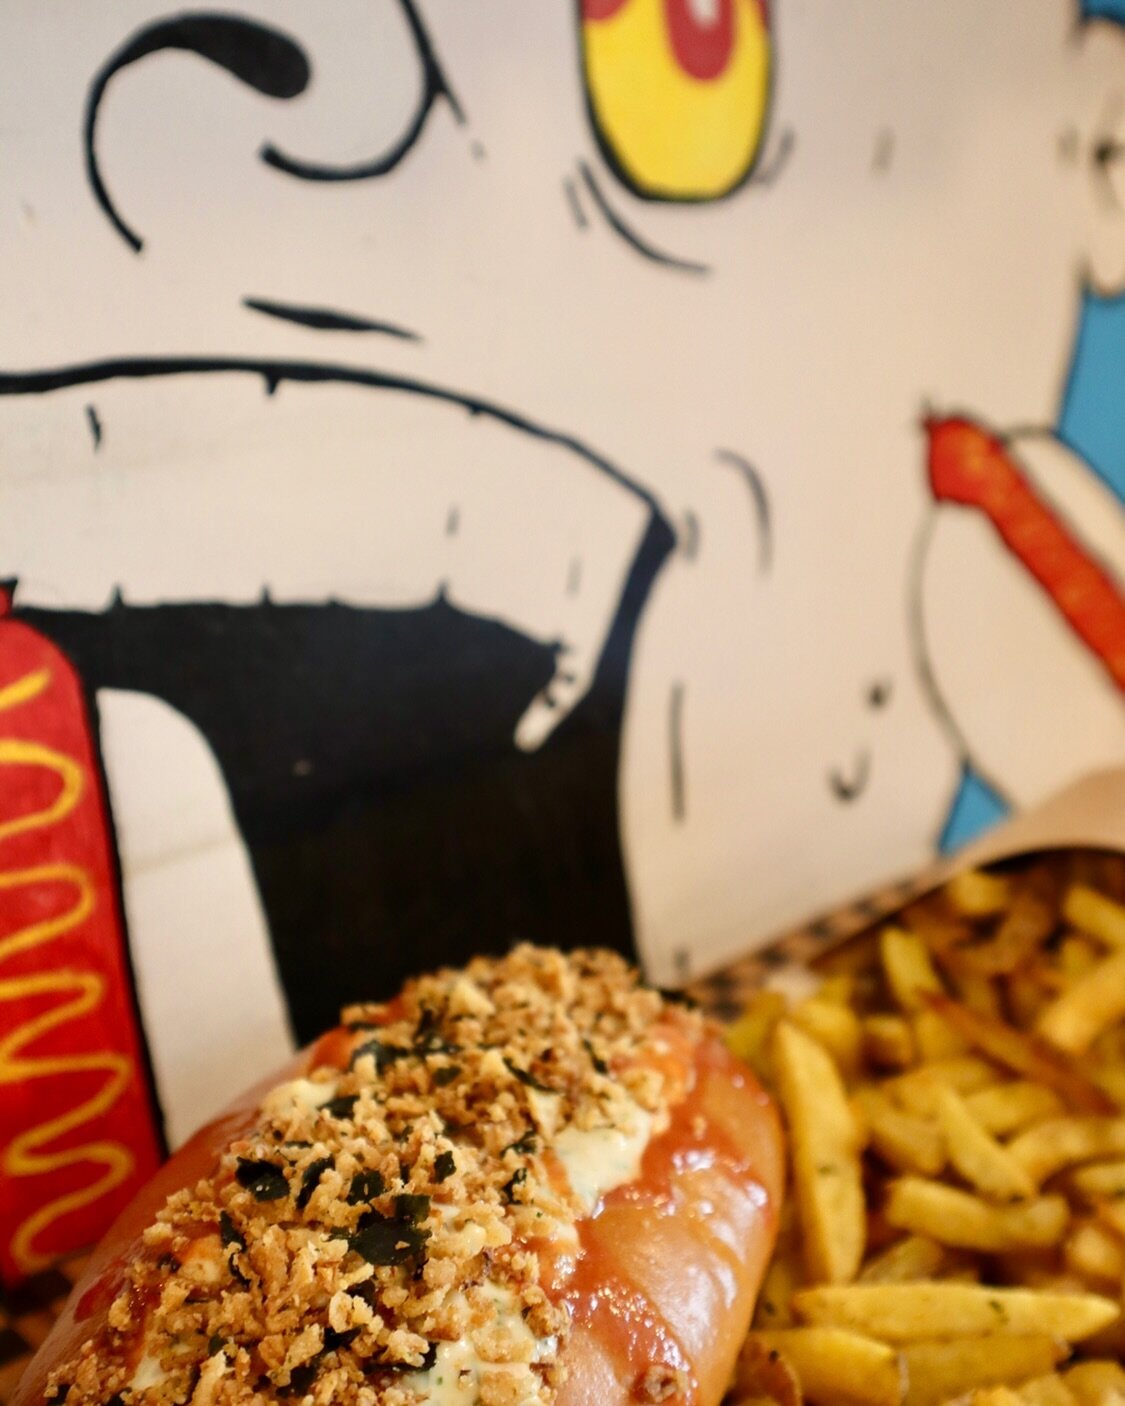 Blue dog. Fries. 🔵 🌭 🍟 
.
.
.
.
.
.
.
#bristolfood #hotdog #fries #bristollife #bristolart #wappingwharf #fastfood #ukfastfood #foodporn #foodstagram #hotdogsofinstagram #beeffrank